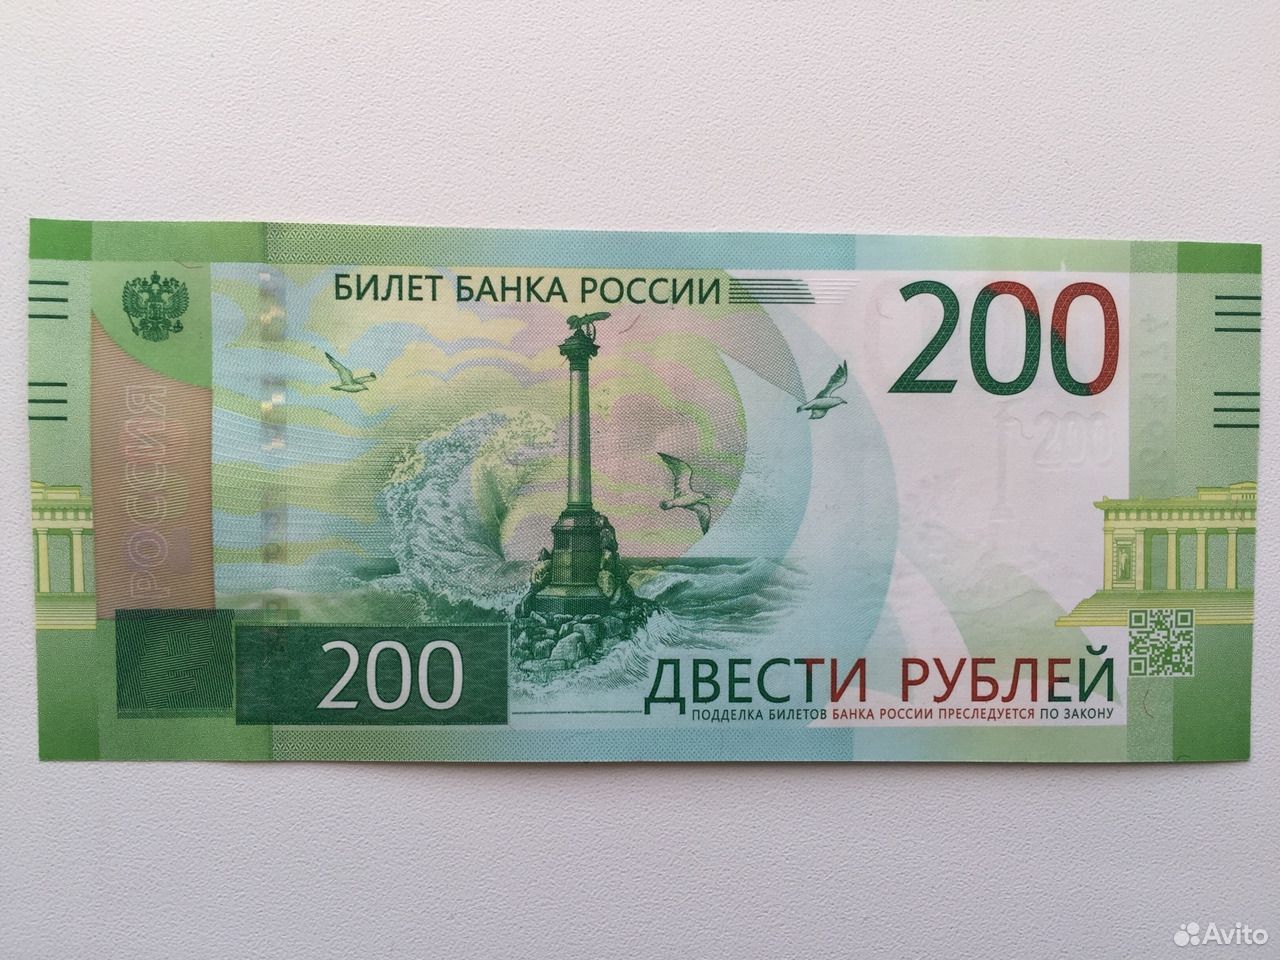 Вариант 200 рублей. 200 Рублей 2017 года. 200 Рублей купюра 2017. Купюра 200 рублей 2017 года. 200 Рублей банкнота.